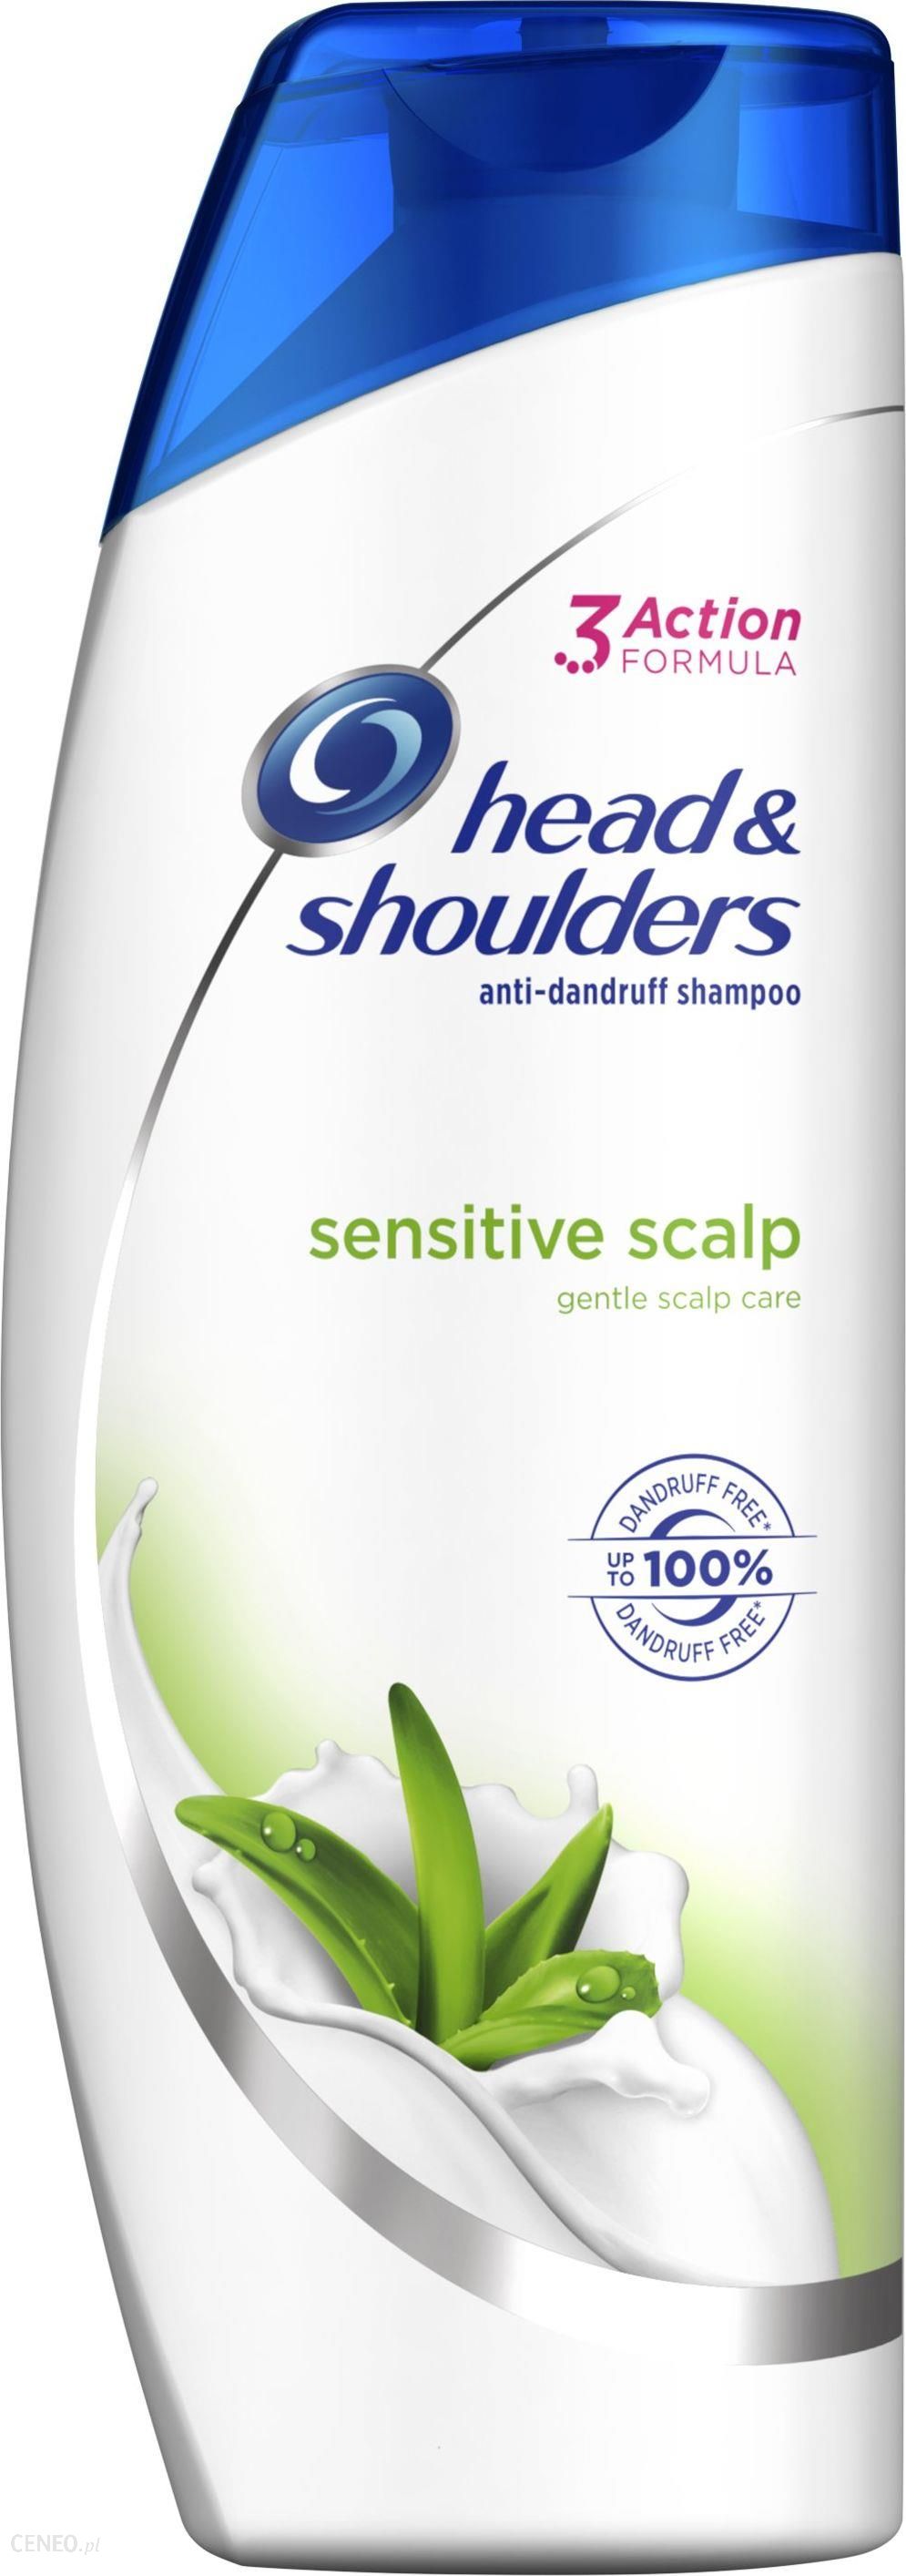 headen shouders szampon ceneo